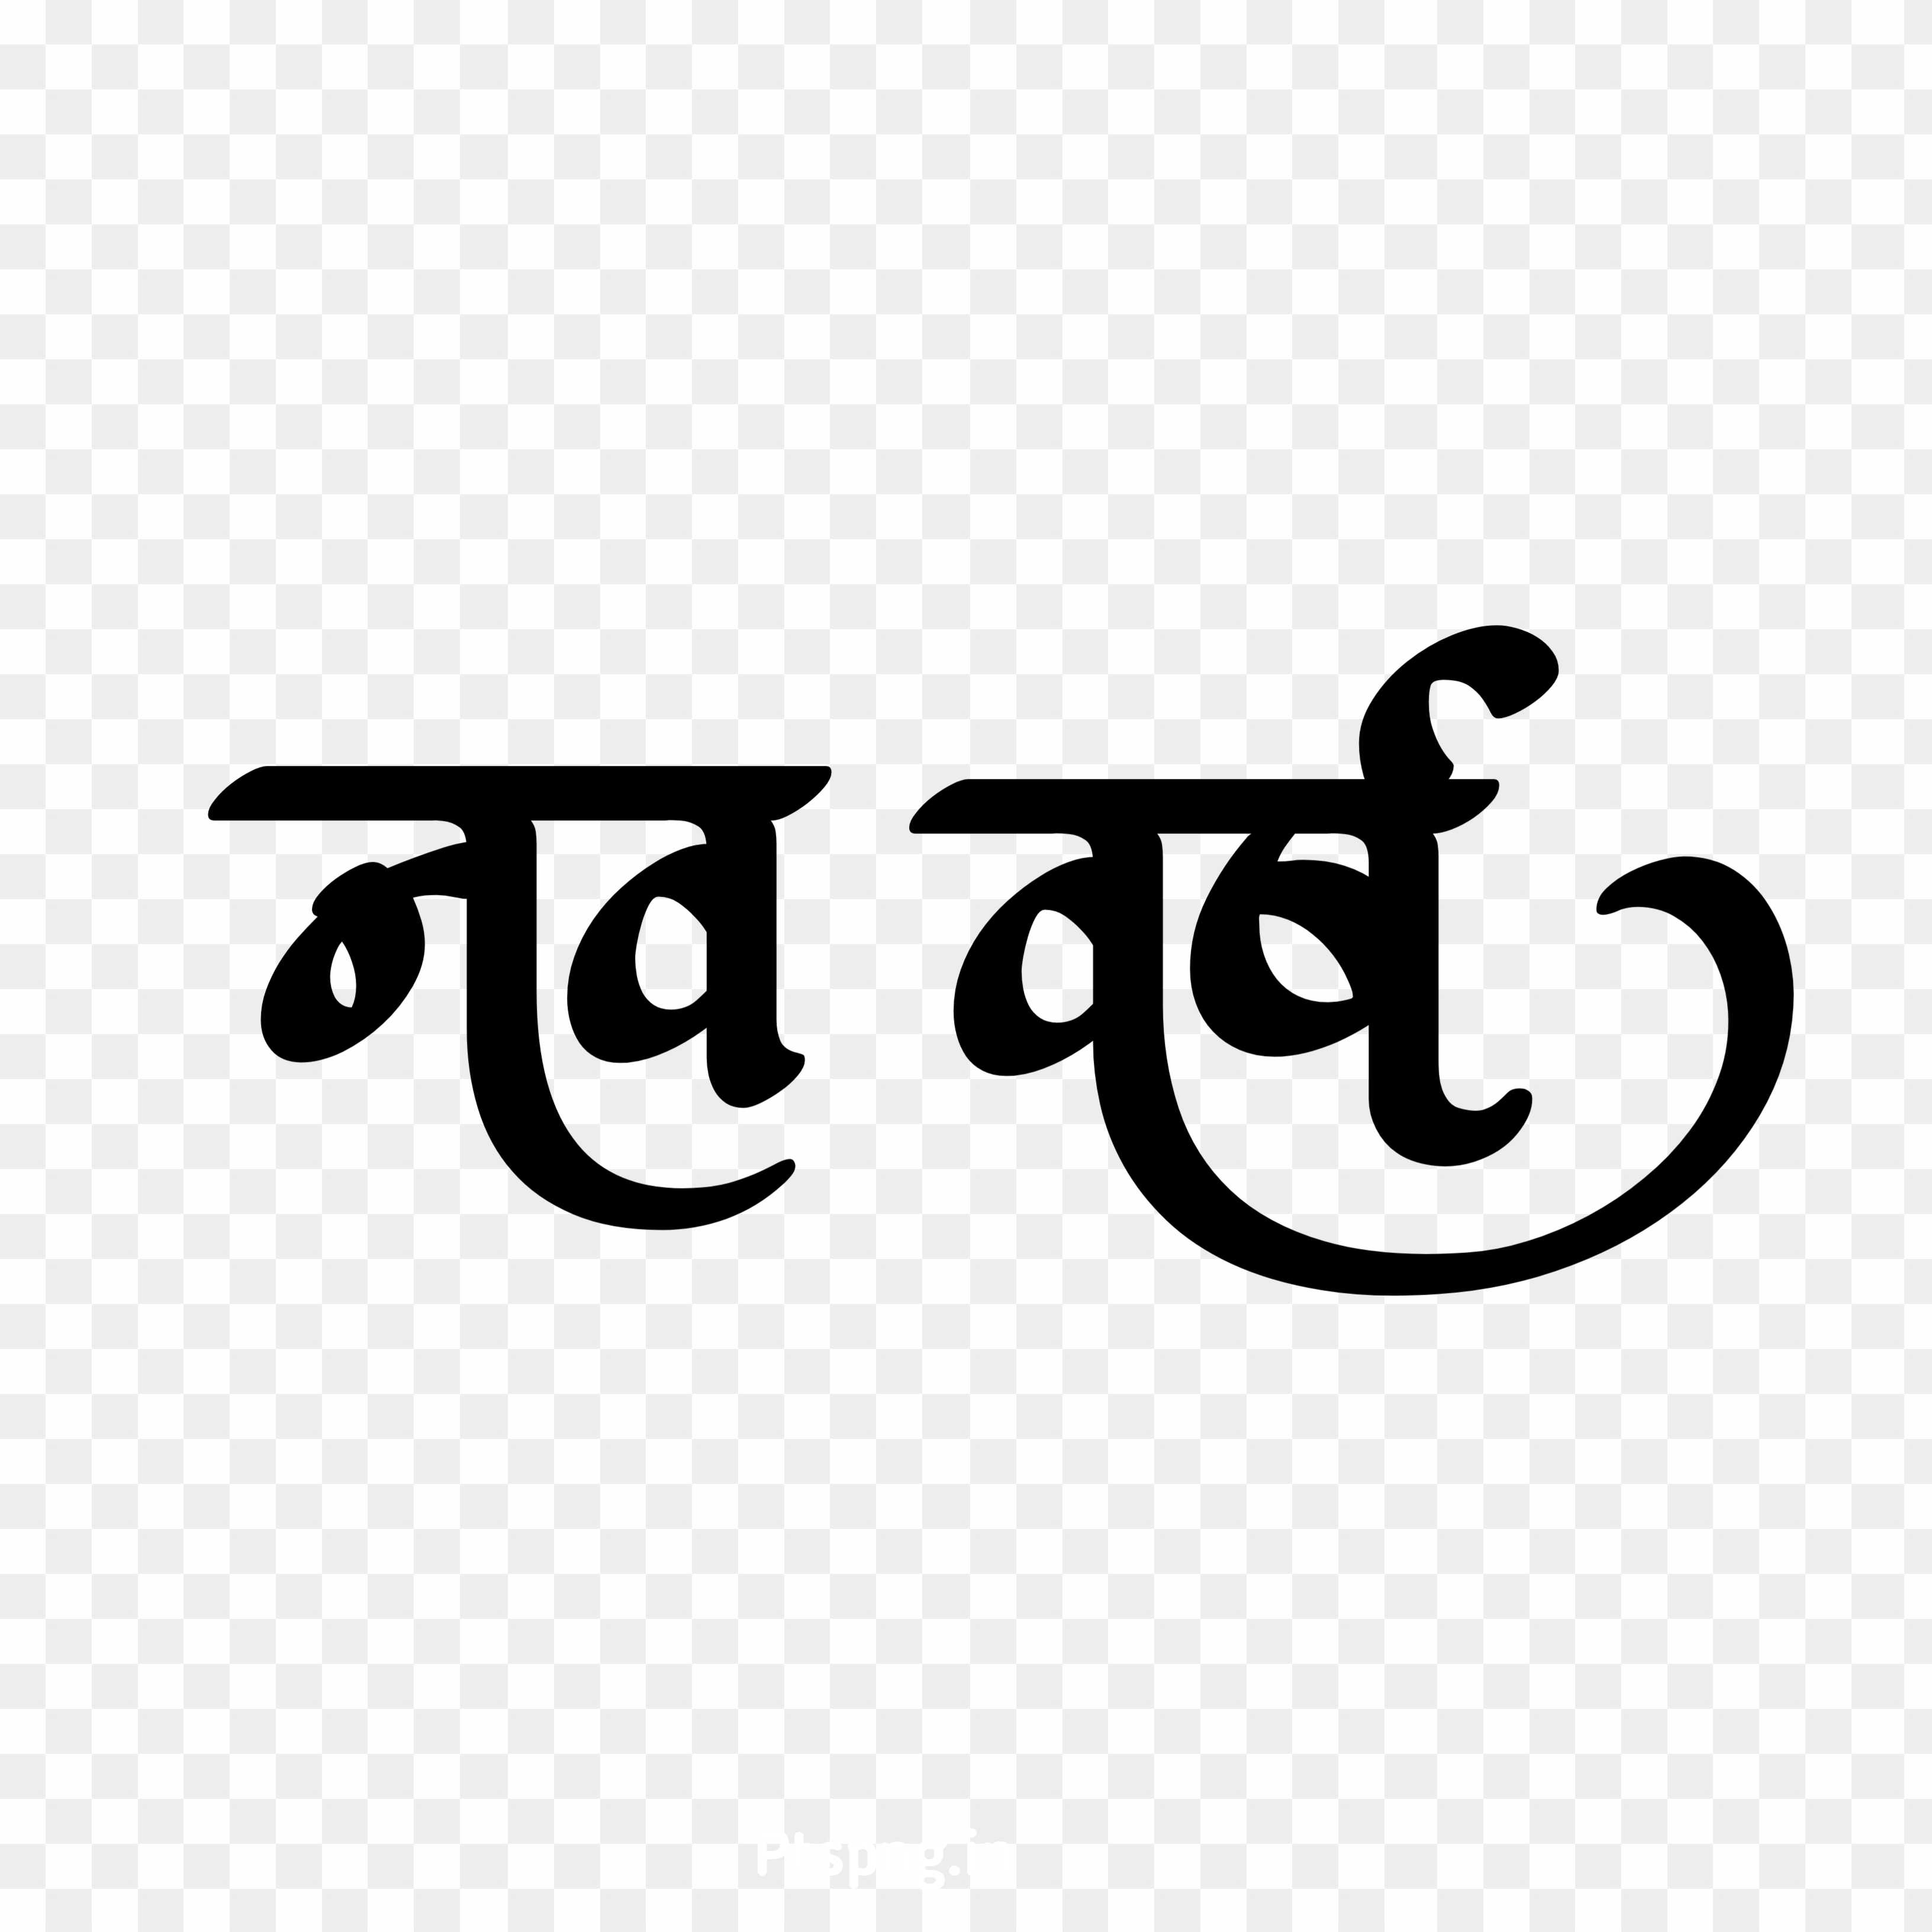 Stylist Hindi nav varsh text PNG images download